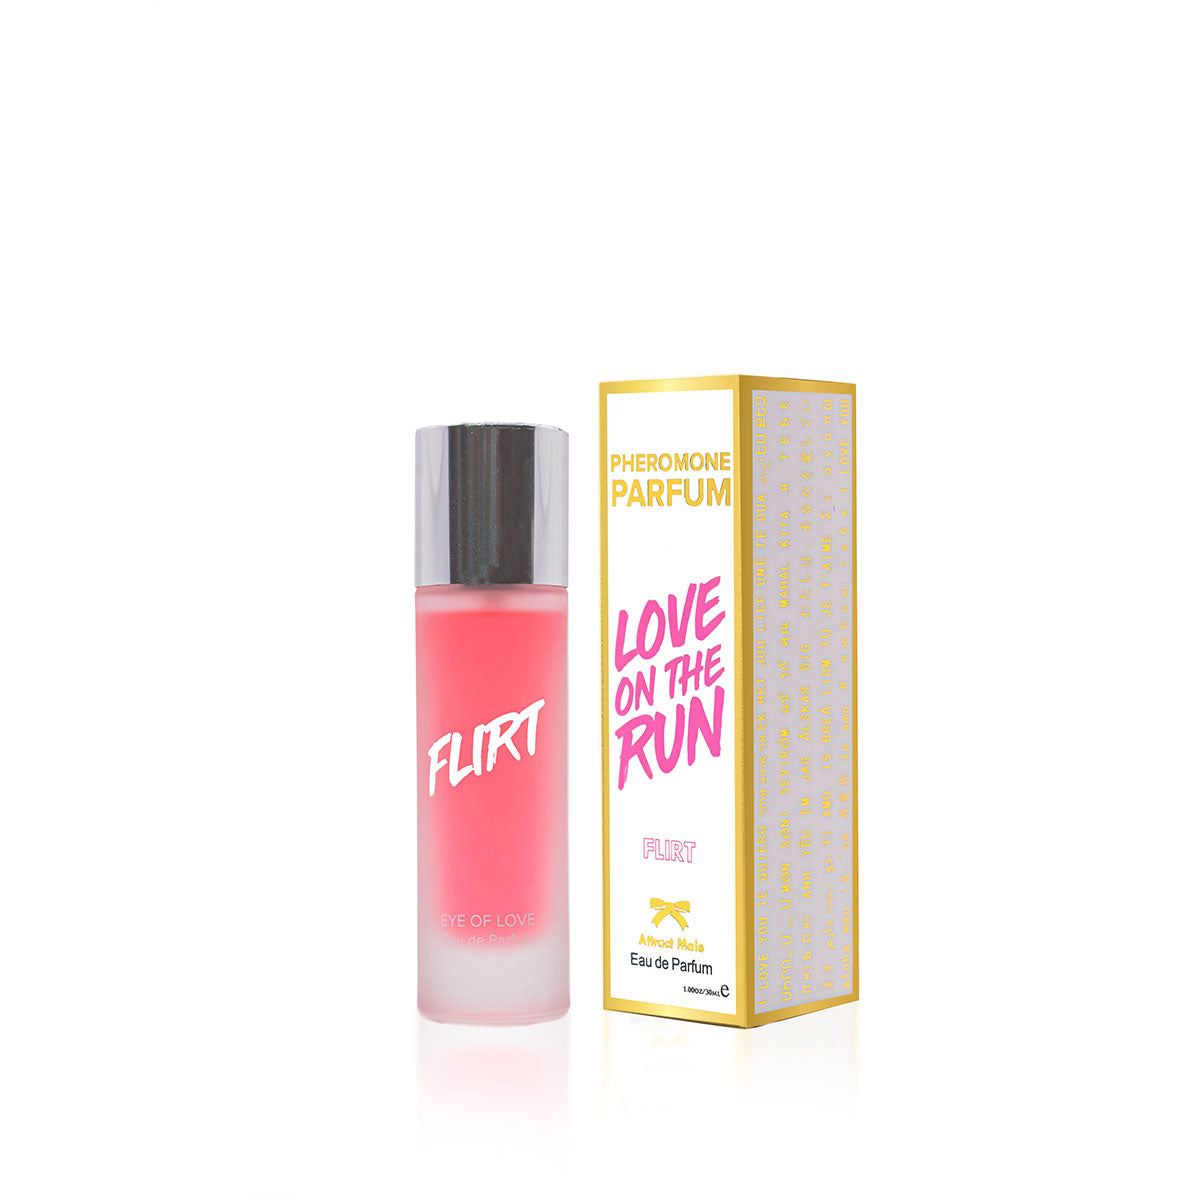 Eye of Love - Love on the Run Pheromone Parfum 30ml - Flirt (F to M) Intimates Adult Boutique